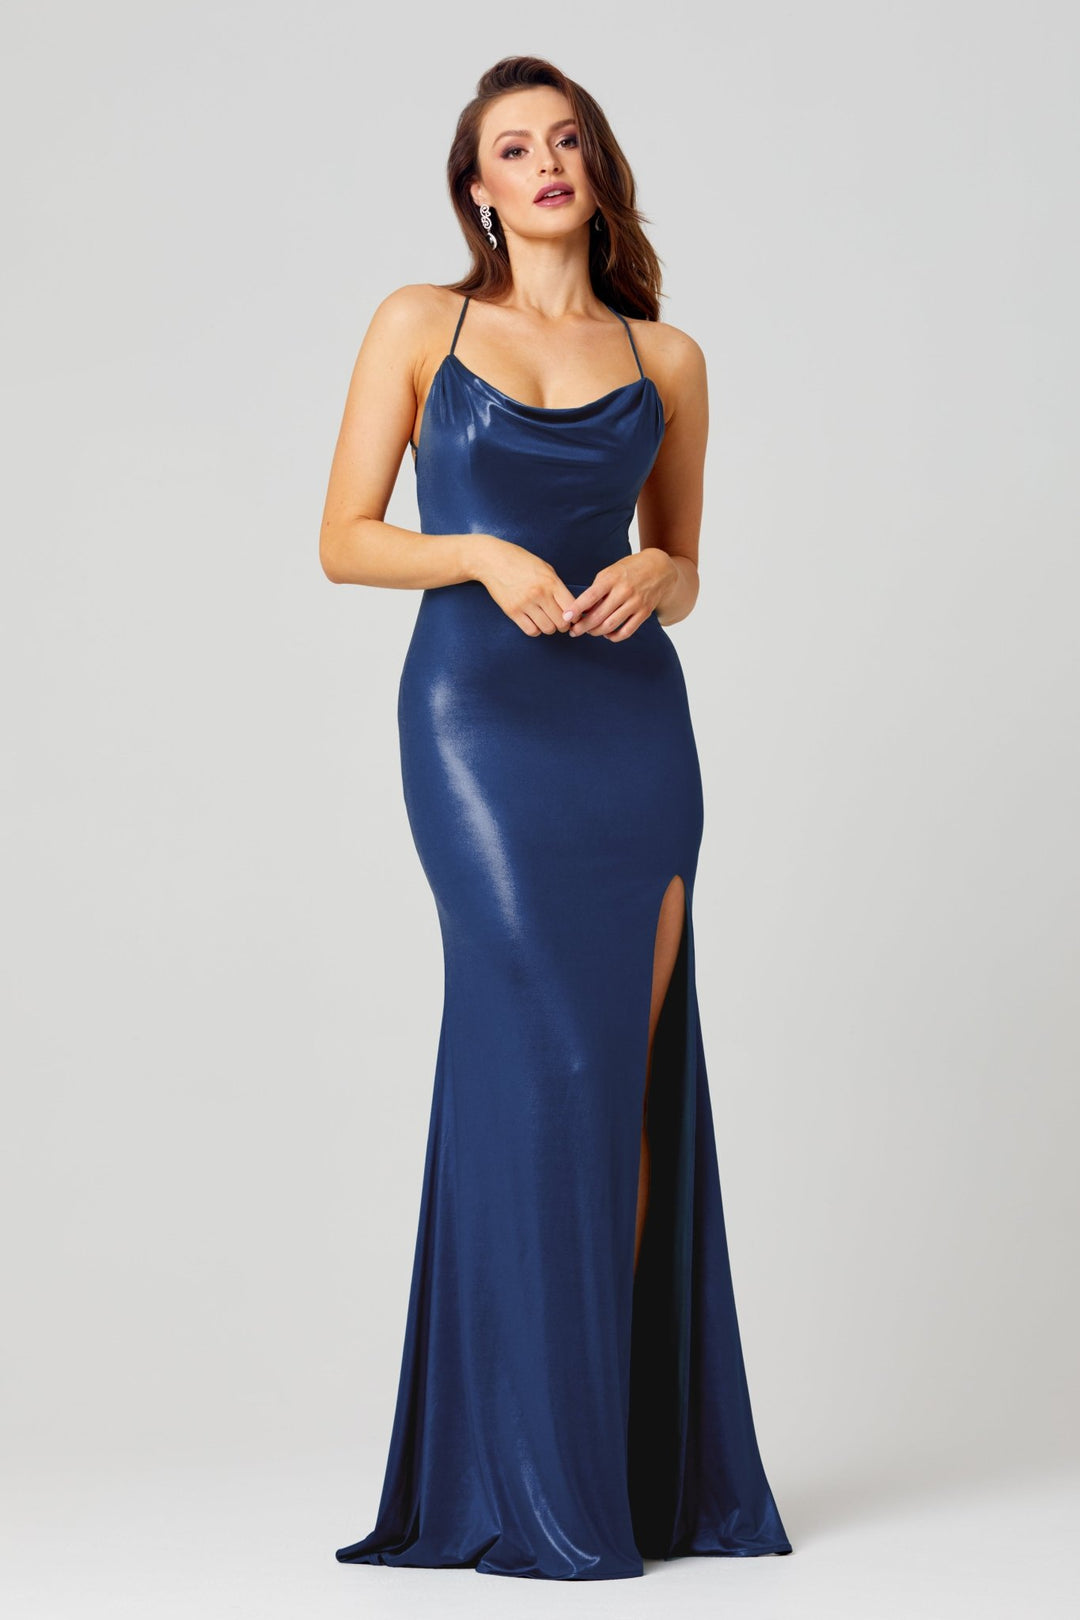 Piper Dress By Tania Olsen Sizes 14 - 20 PO858 - ElissaJay Boutique